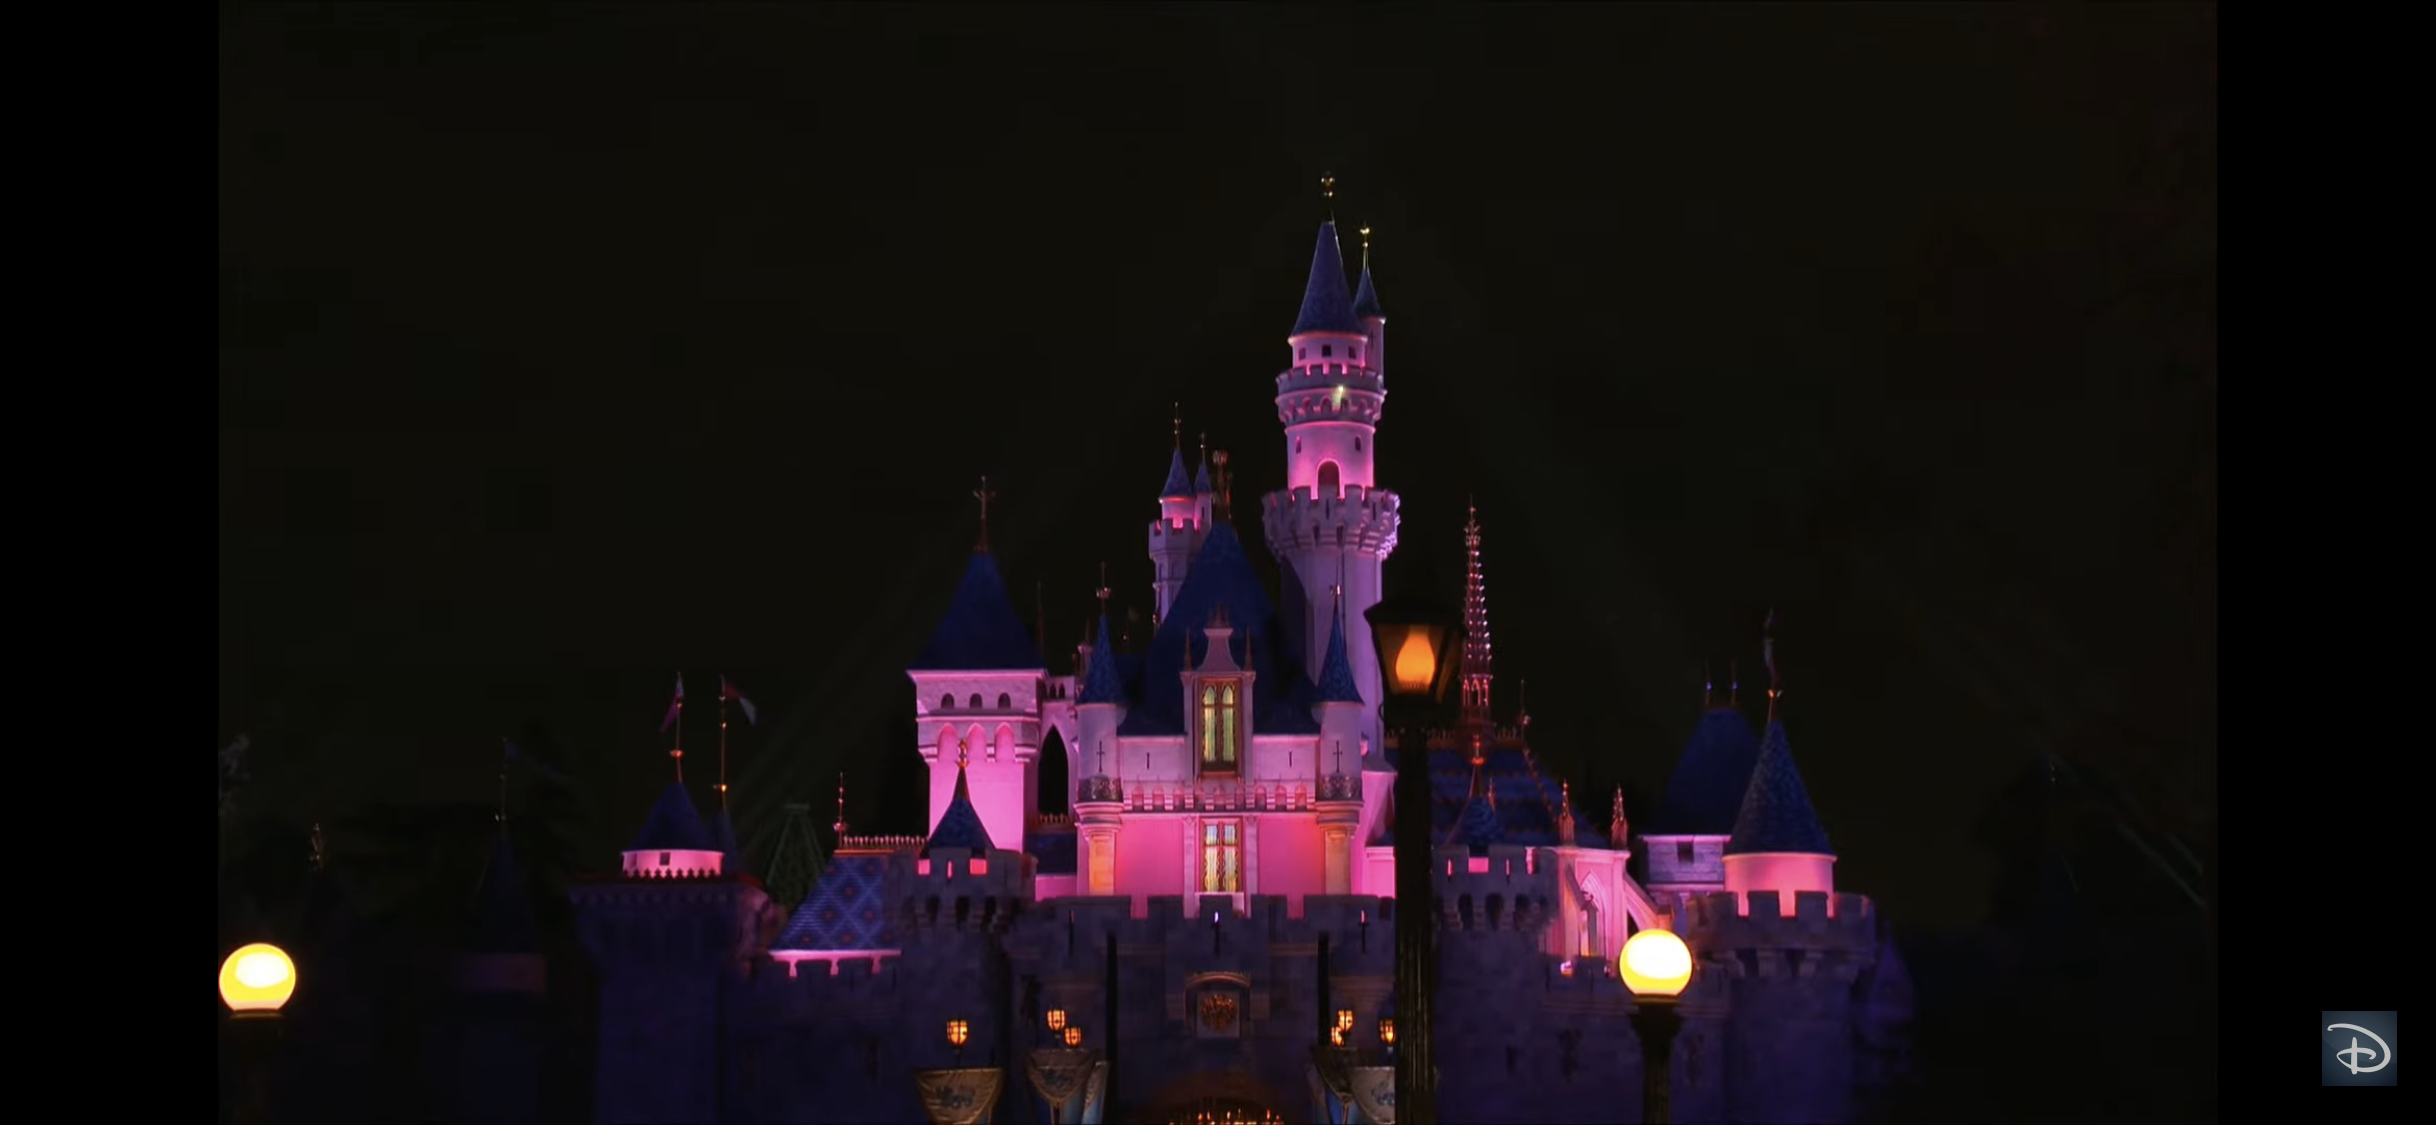 DLR - Loungefly Disneyland Mickey & Sleeping Beauty Castle